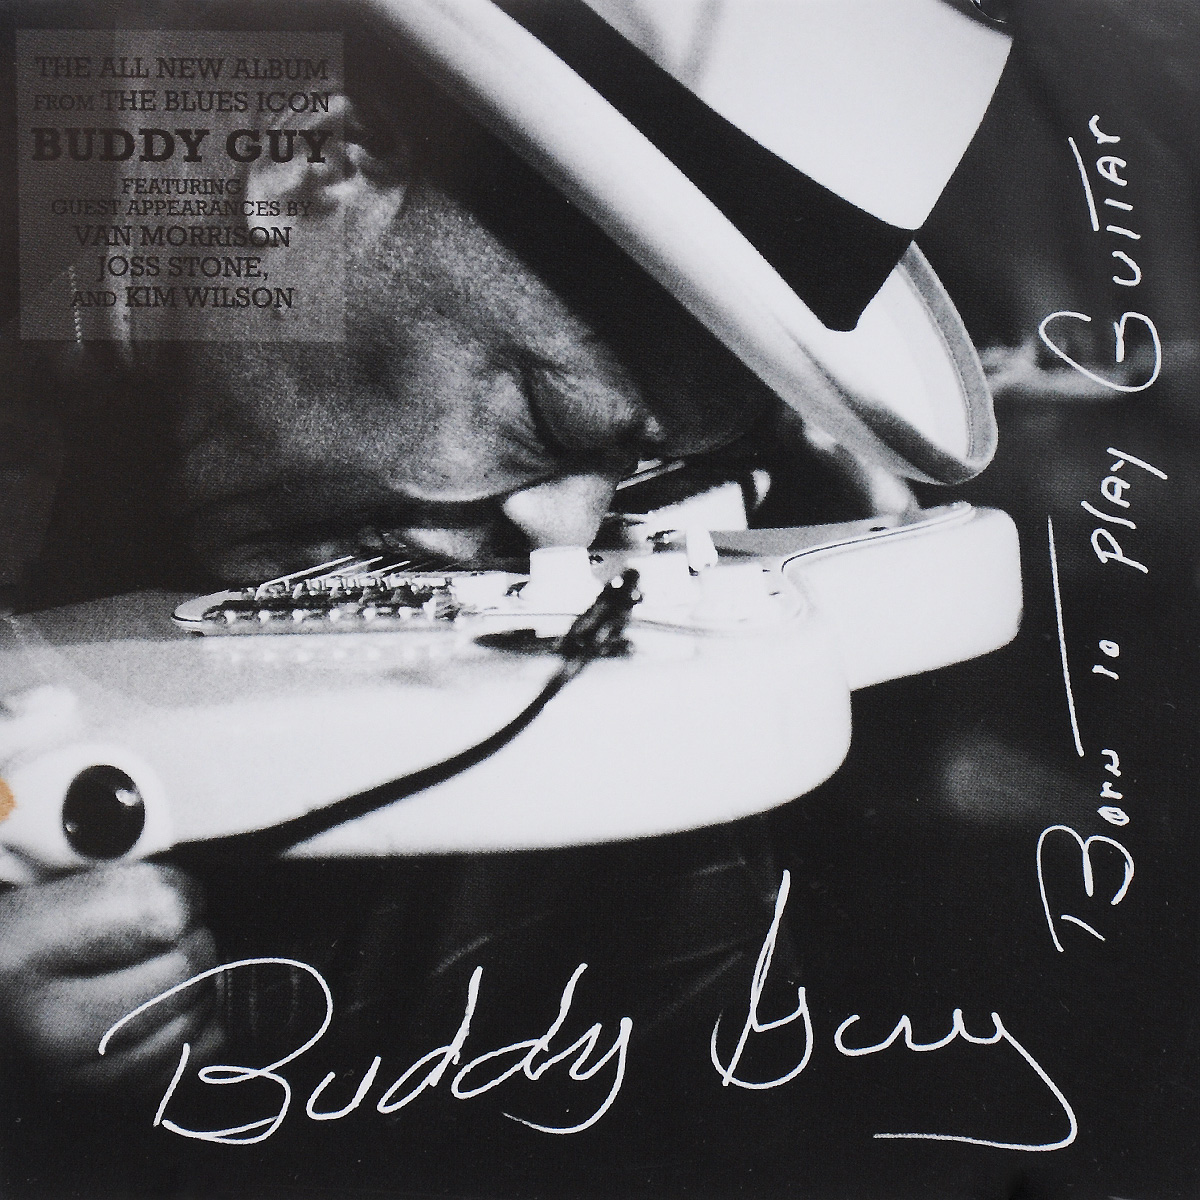 Buddy Guy. Born To Play Guitar